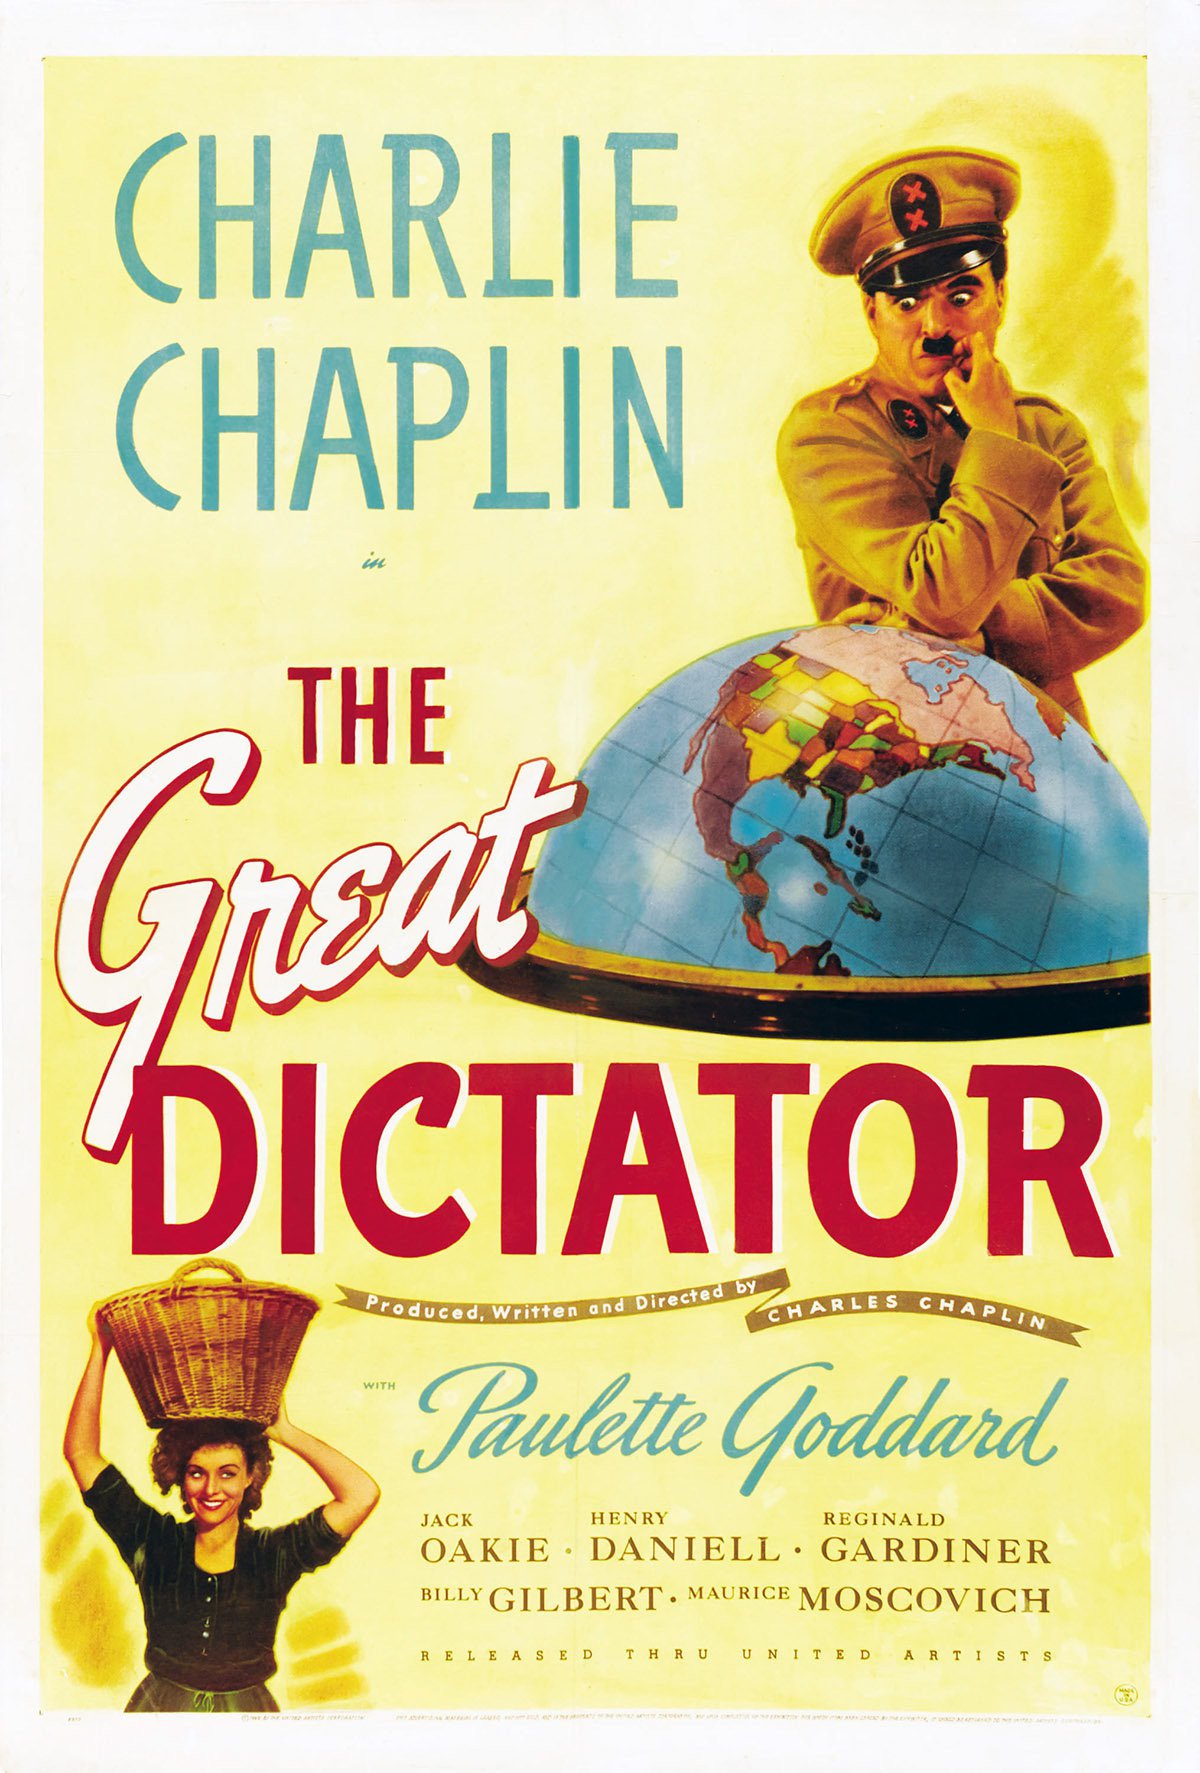 Nonton film Charlie Chaplin The Great Dictator layarkaca21 indoxx1 ganool online streaming terbaru